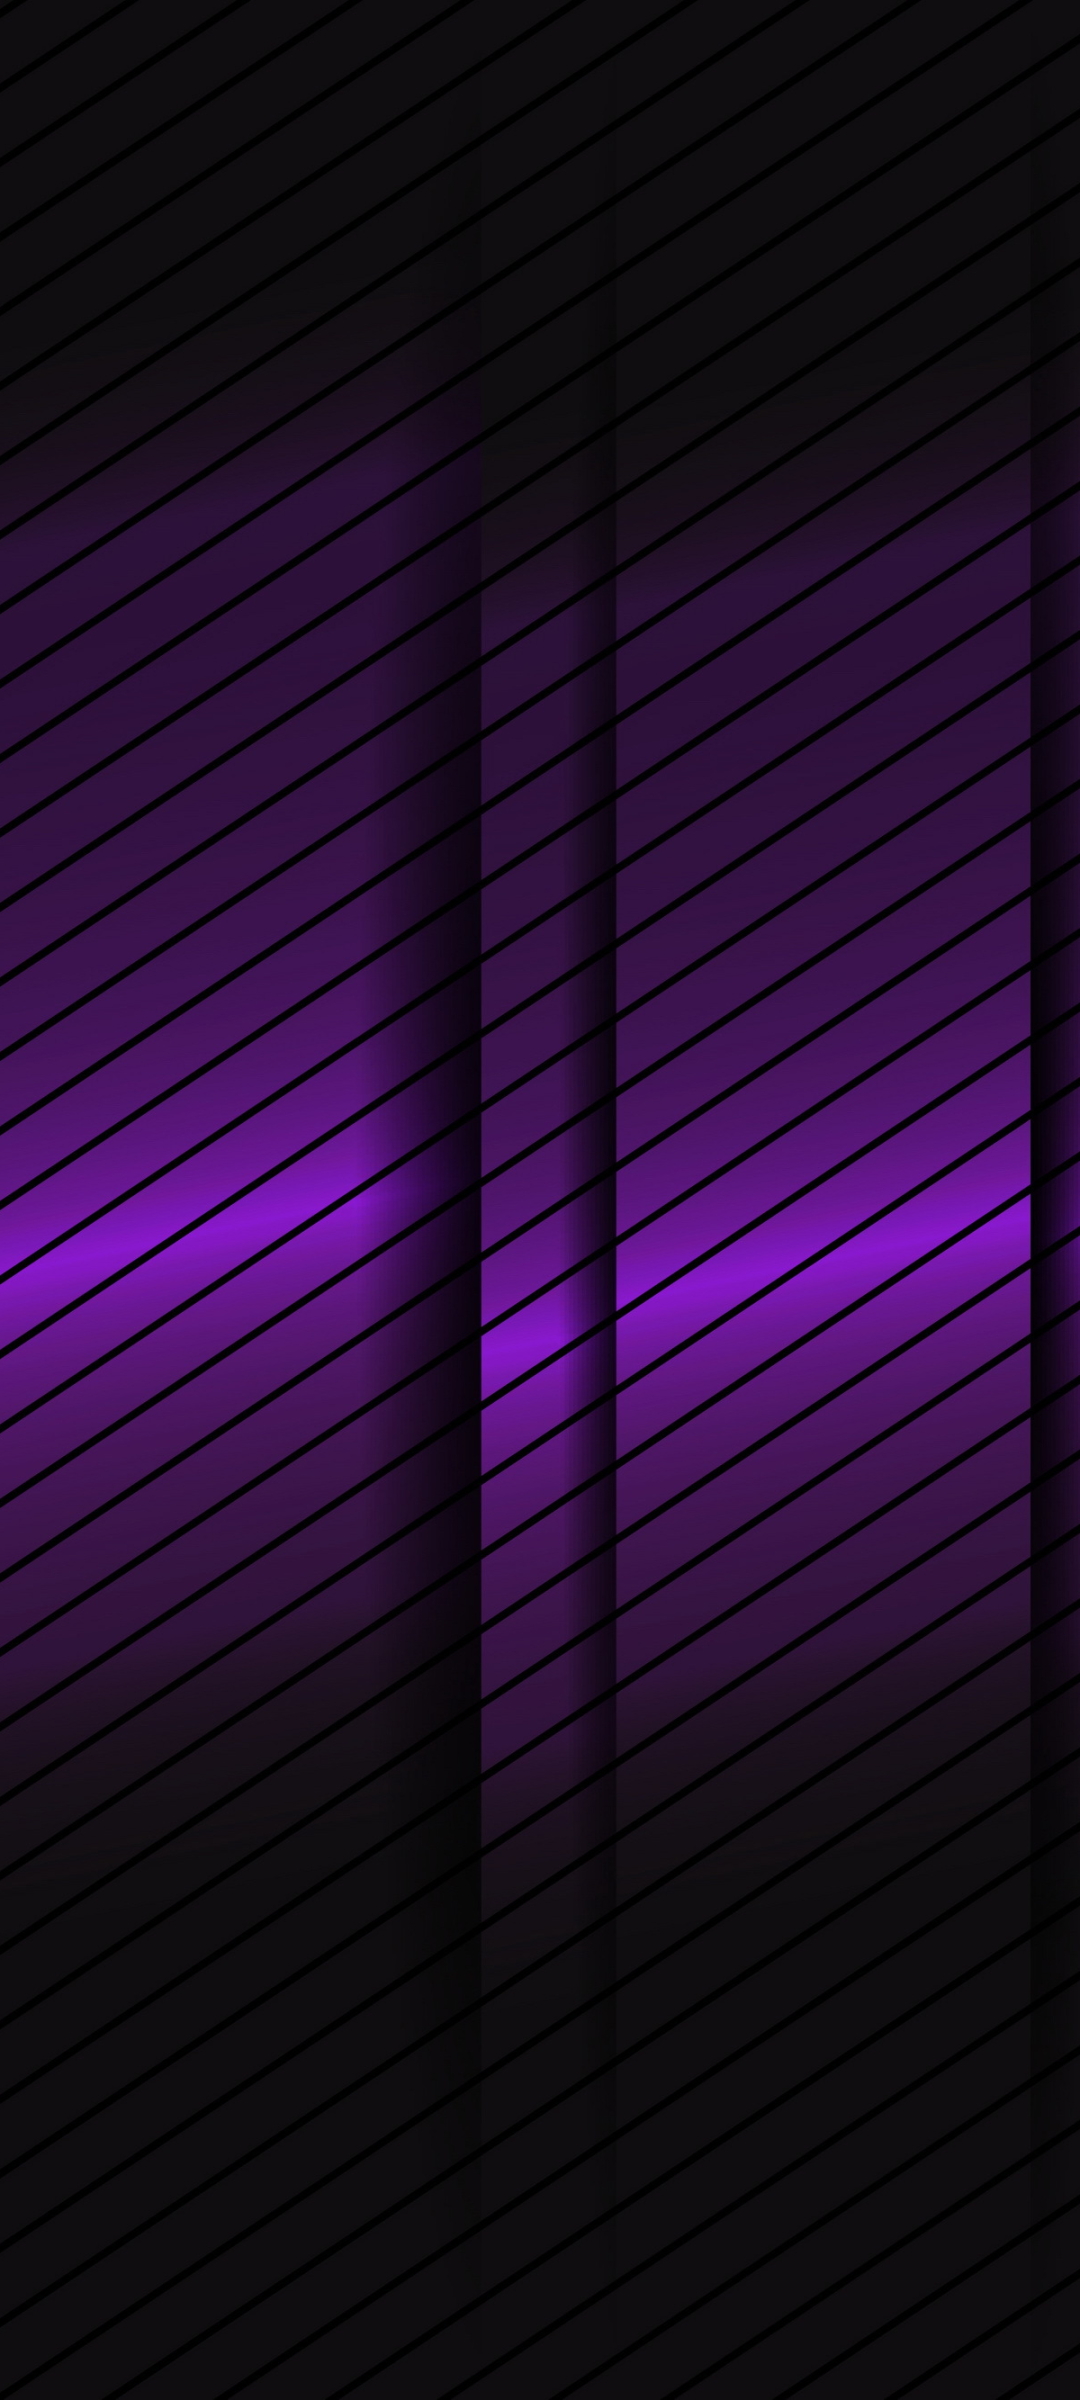 Descarga gratuita de fondo de pantalla para móvil de Púrpura, Degradado, Gradiente, Abstracto.